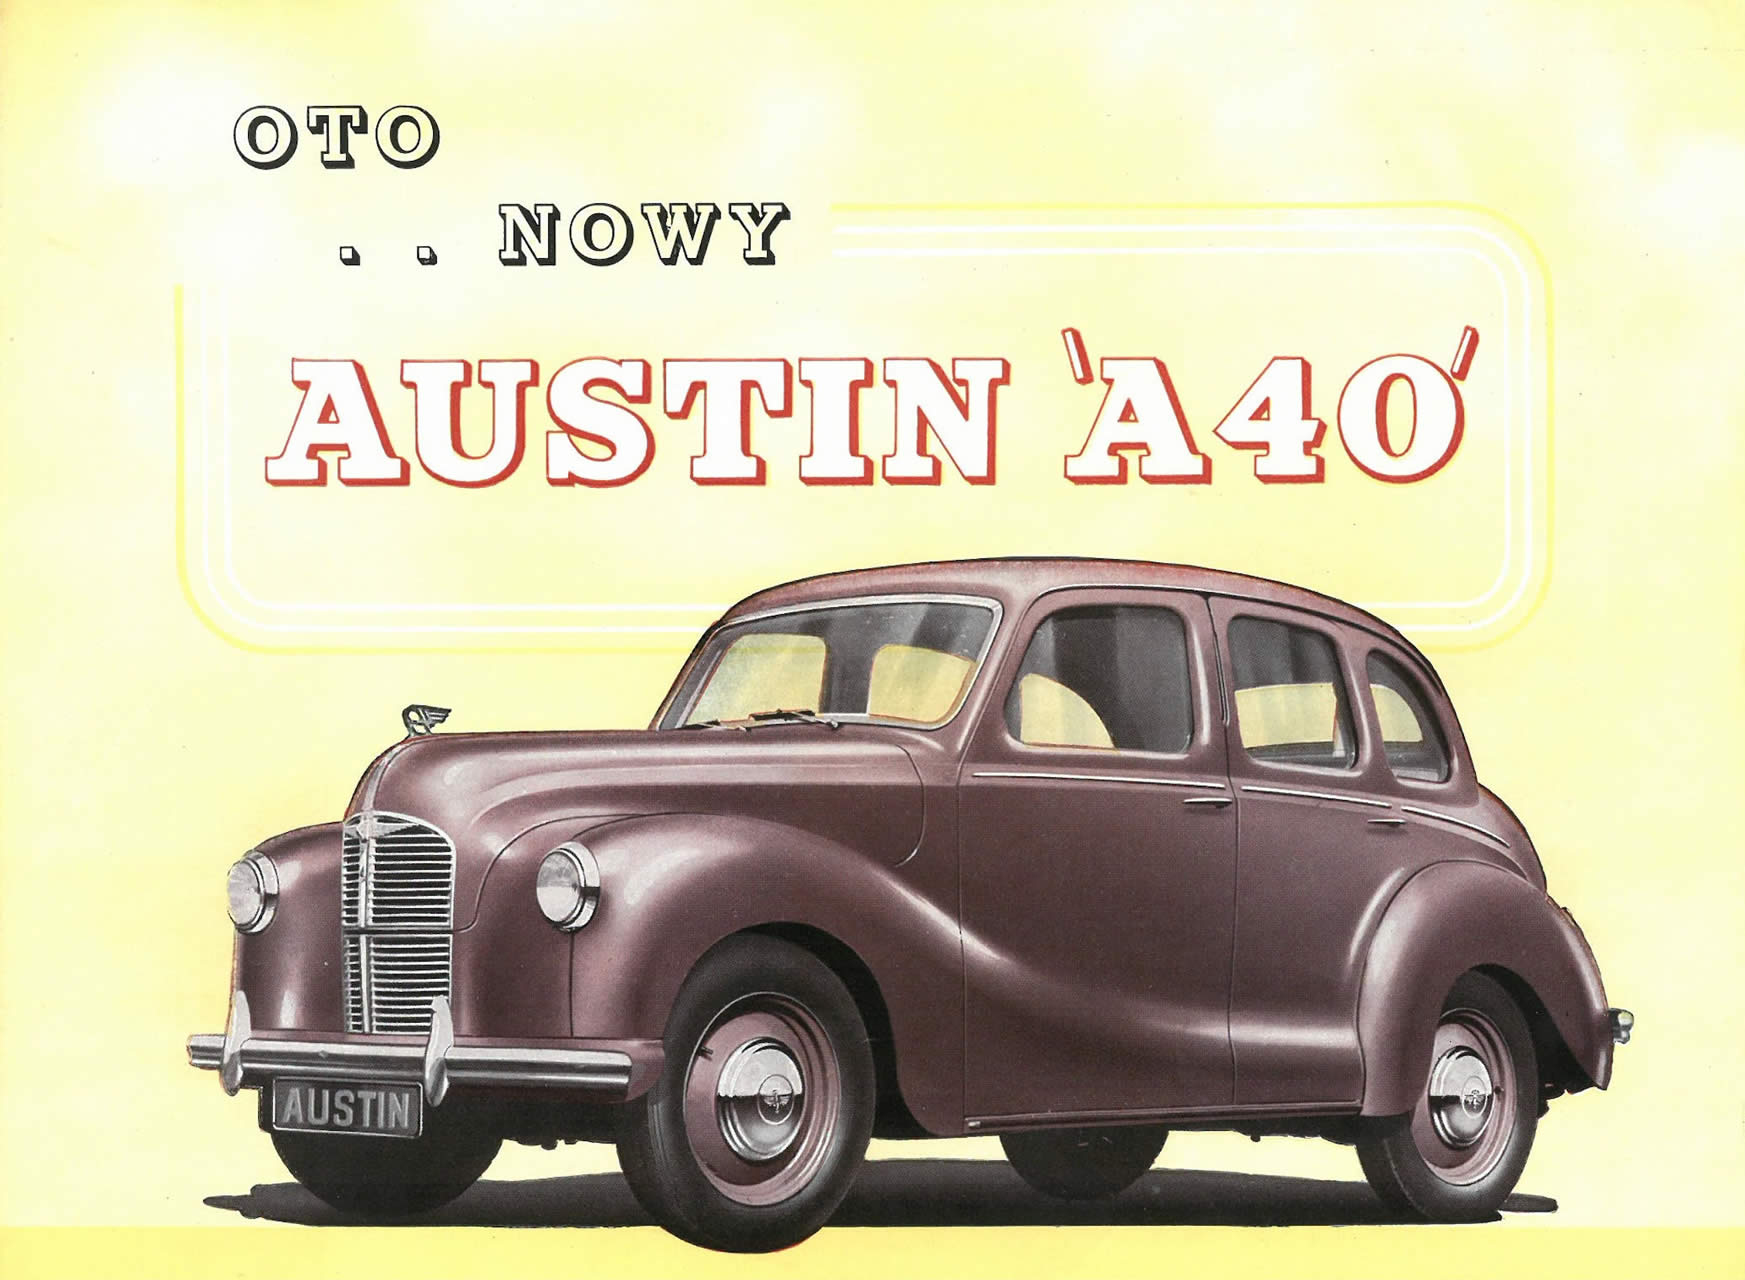 Austin A40 Devon sales brochure cover 1949